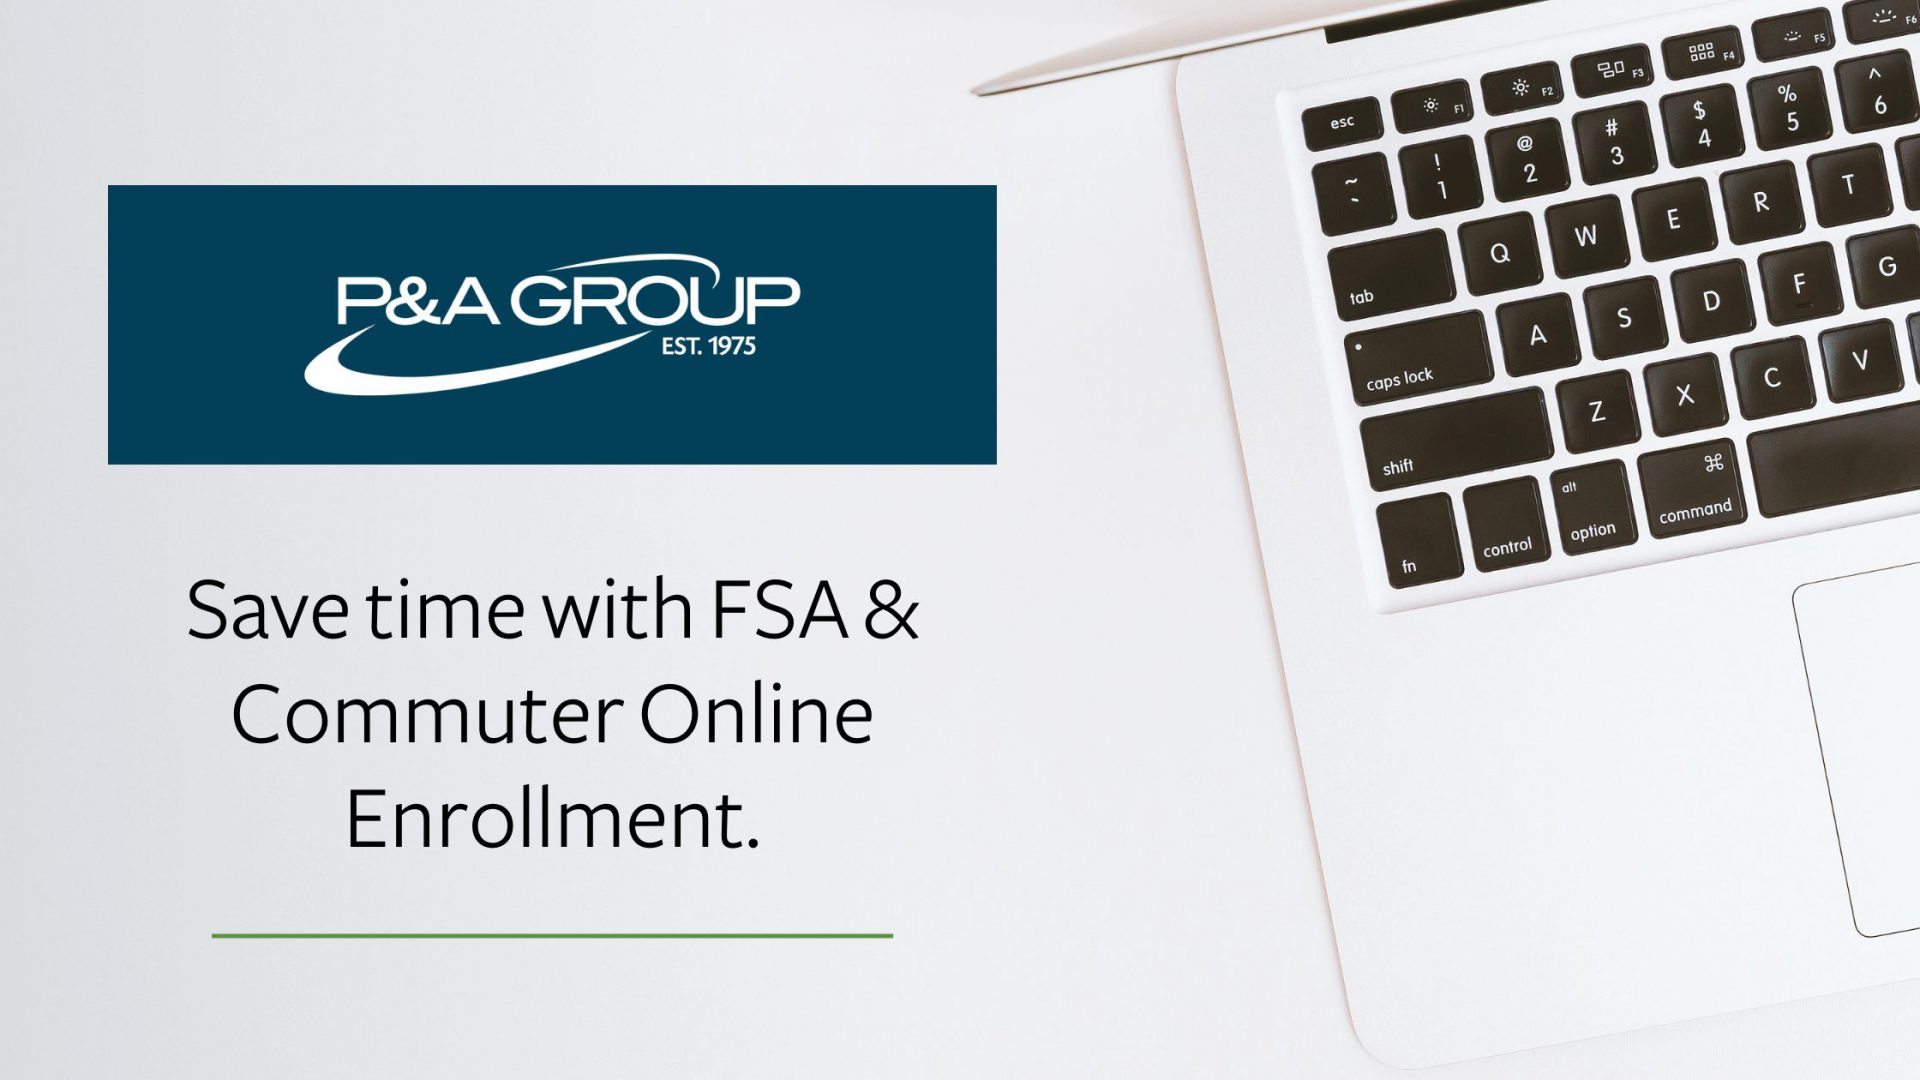 FSA Online Enrollment Adds Value for P&A Group Clients P&A Group